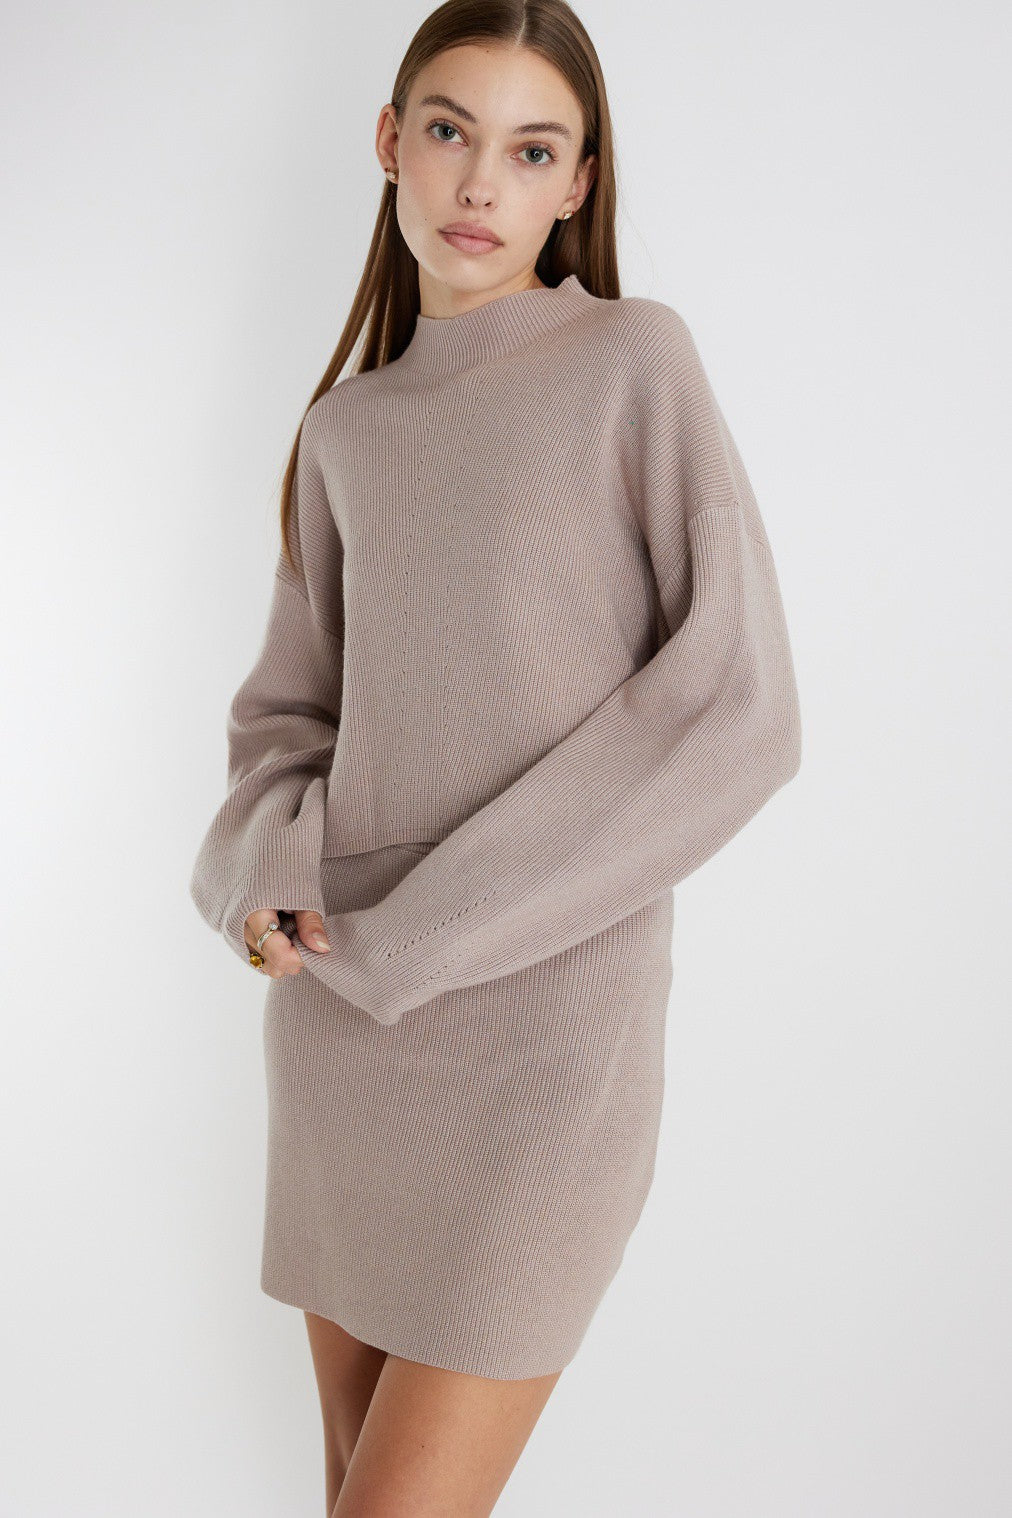 Ottie Sweater - Premium  Denim from Mod Ref - Just $50.40! Shop now at shopthedenimbar